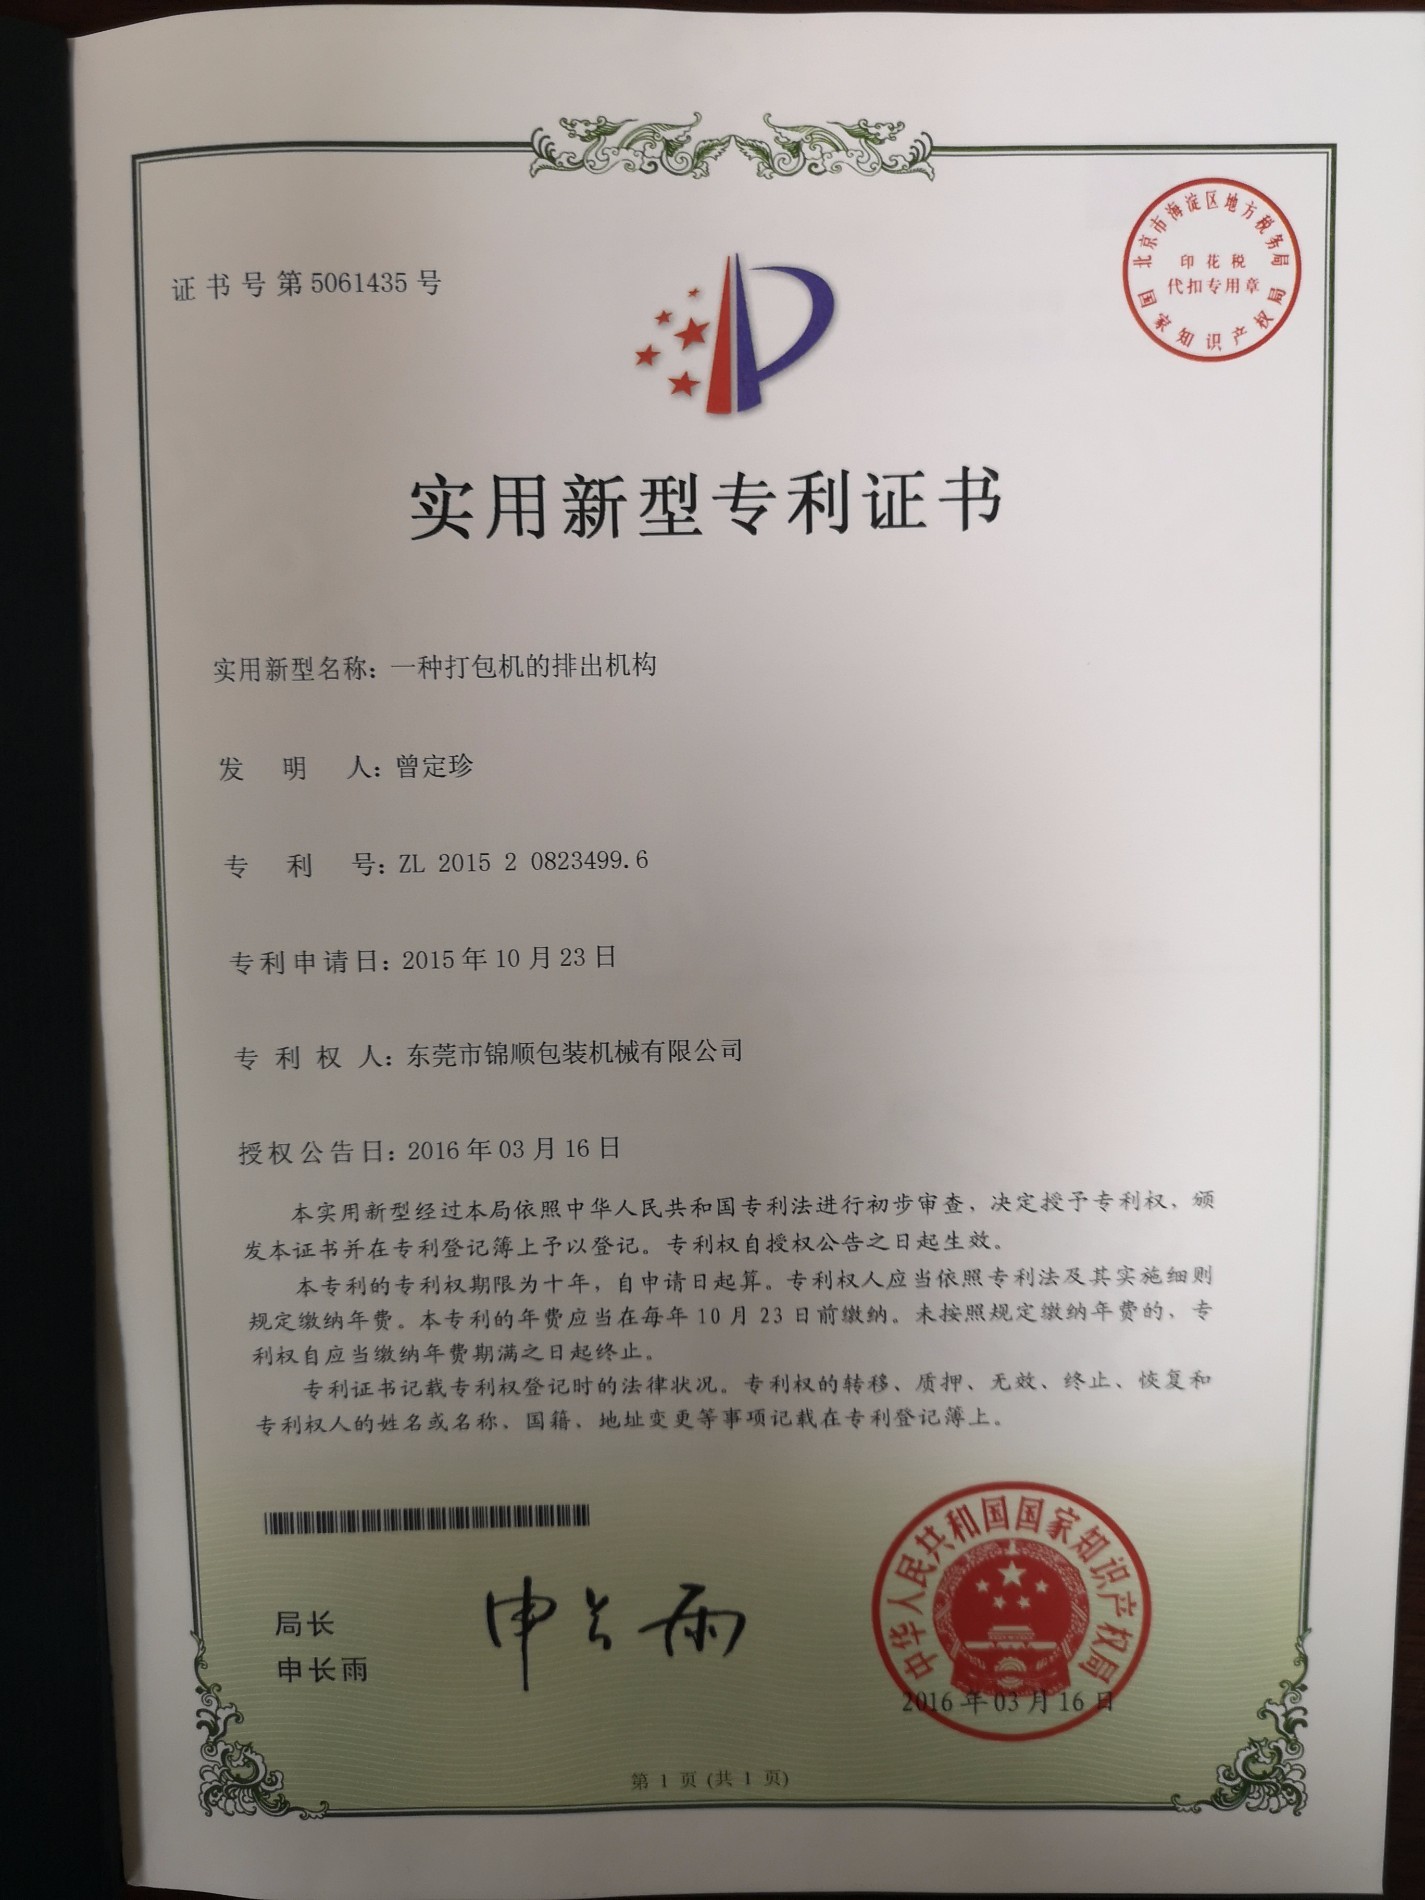  Patent Certificate